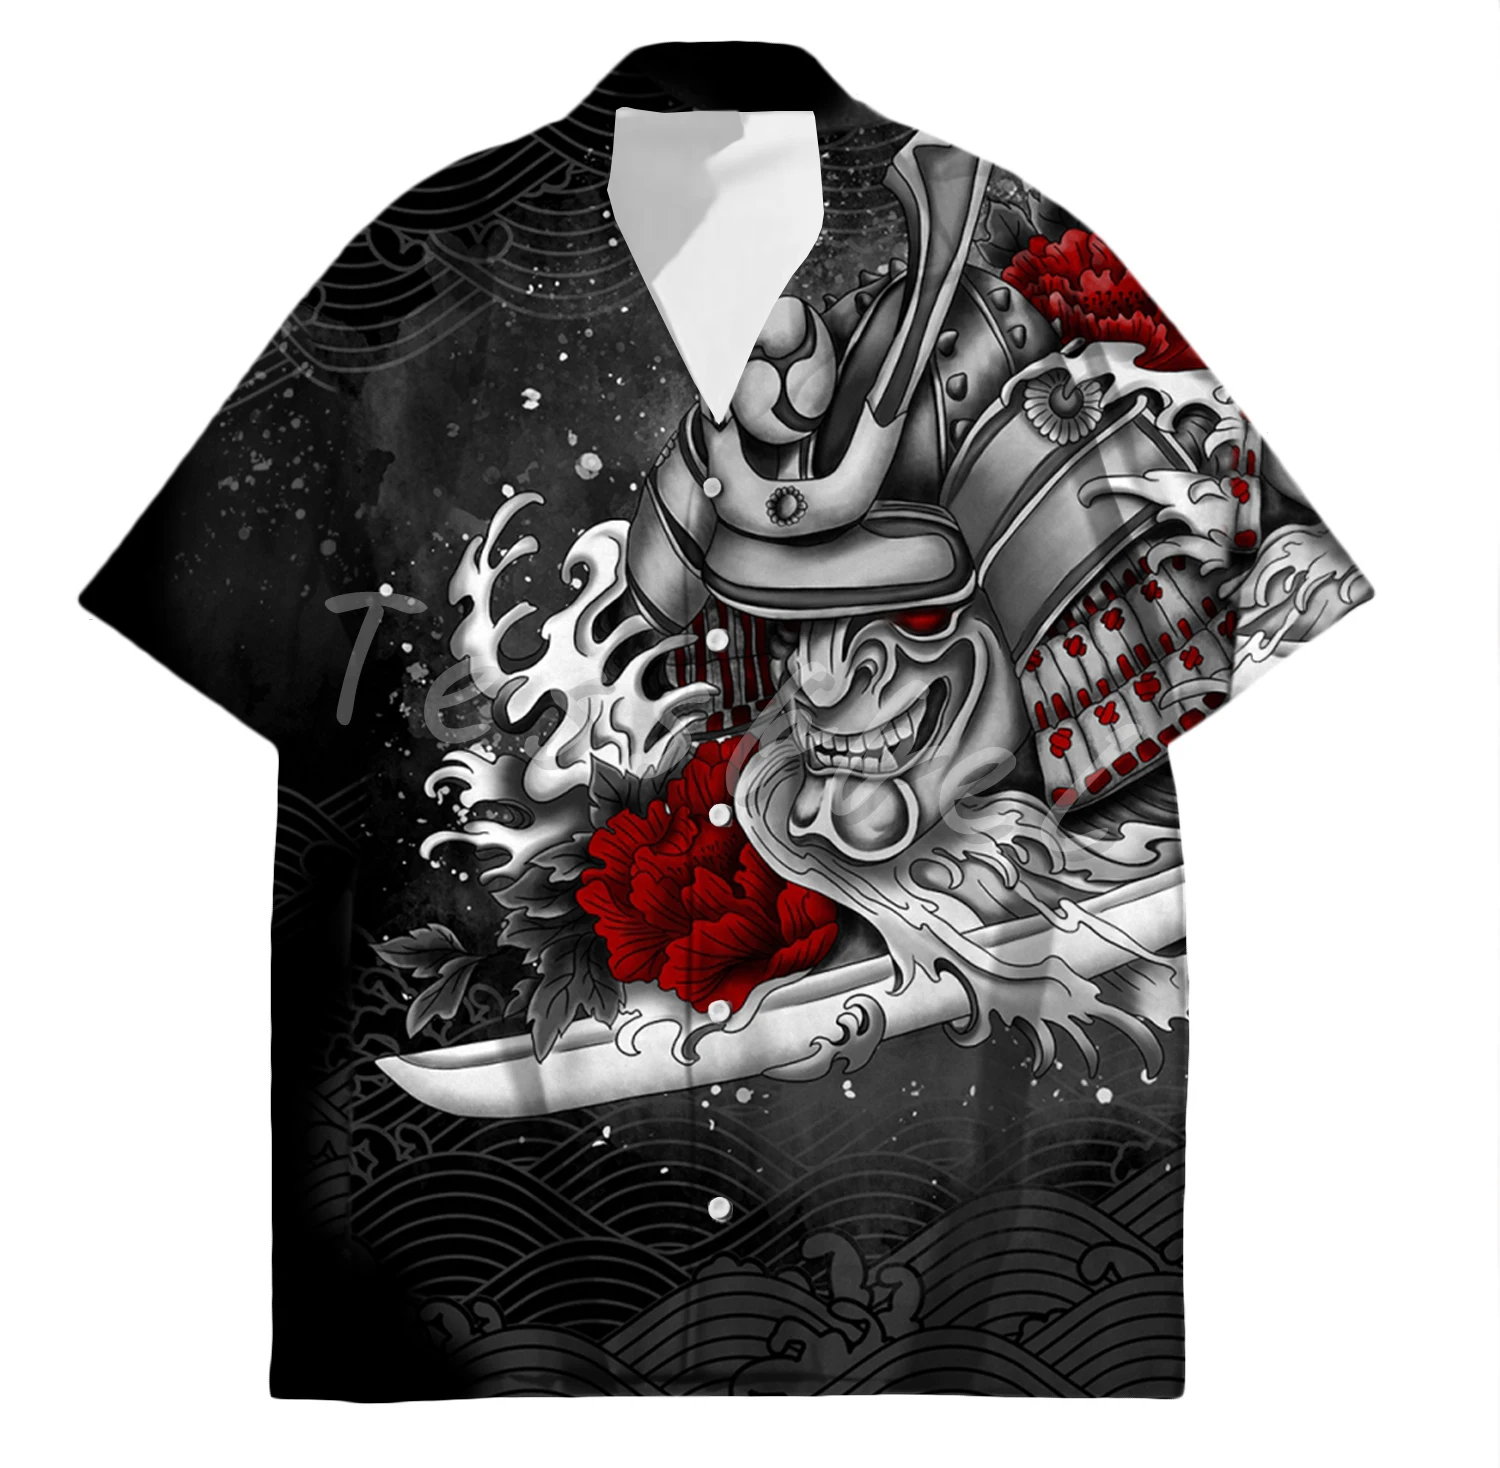 Tessffel Samurai Japan Tattoo 3D Print Men’s Hawaiian Shirts Beach Shirt Fashion Summer Harajuku Casual Oversize Streetwear S26 краска world famous tattoo ink paul rogers jax beach 1 унция 30 мл